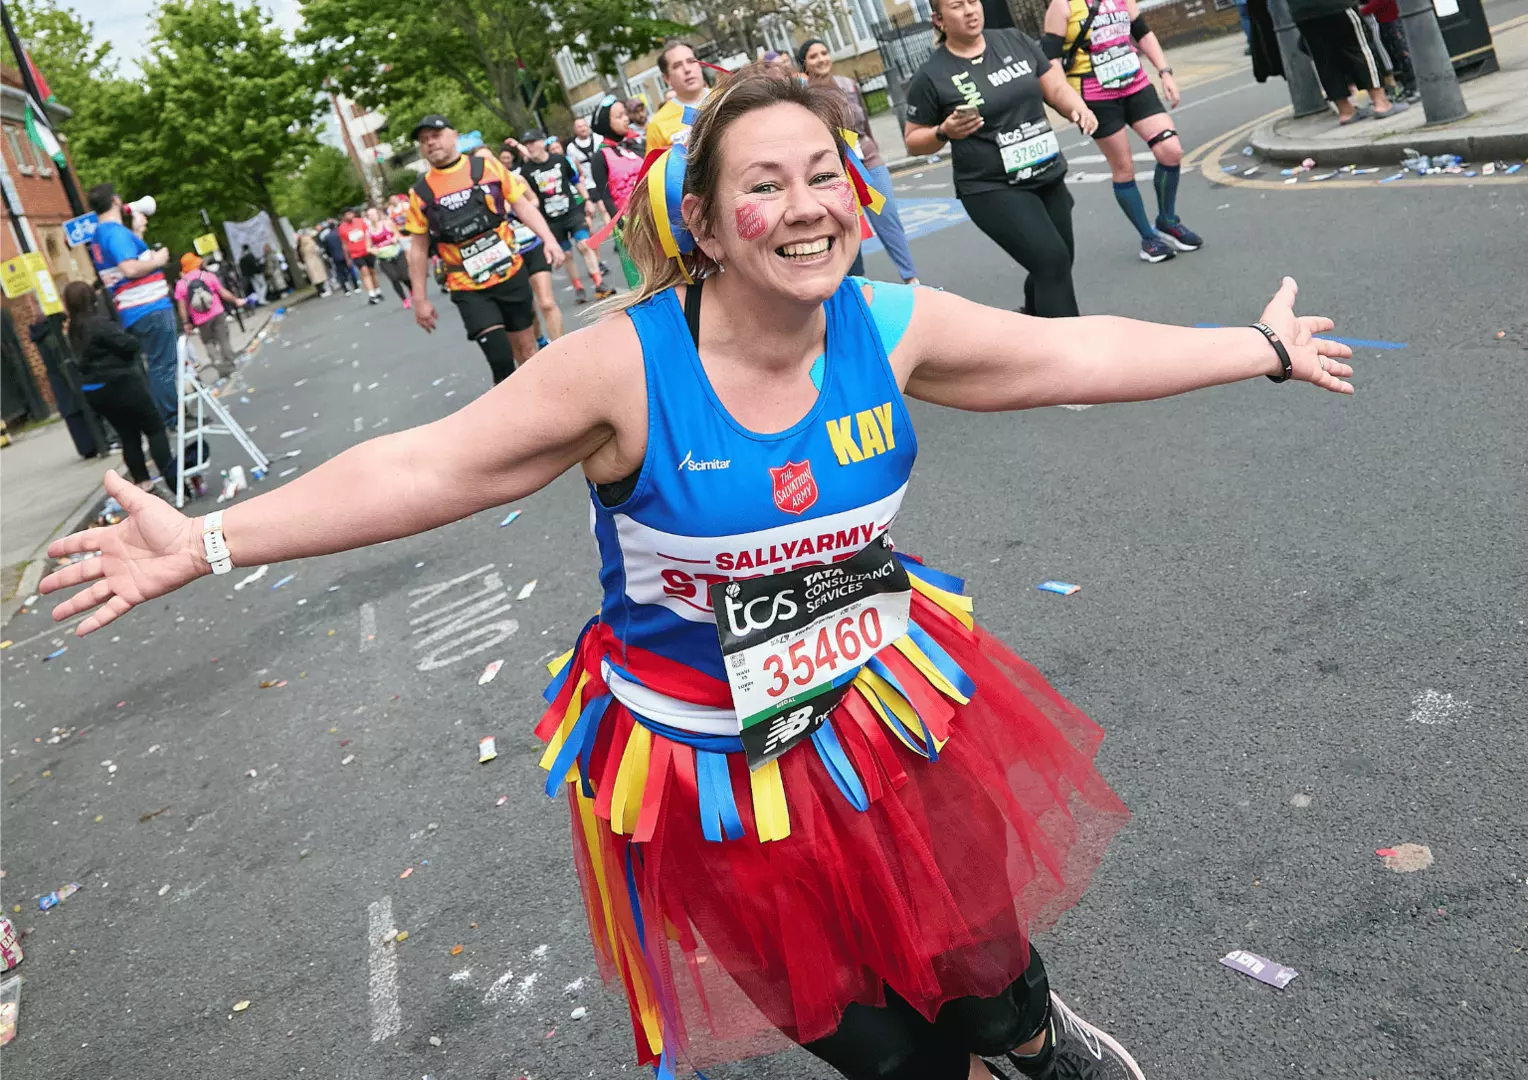 London Marathon Team Sally Army runner names Kay